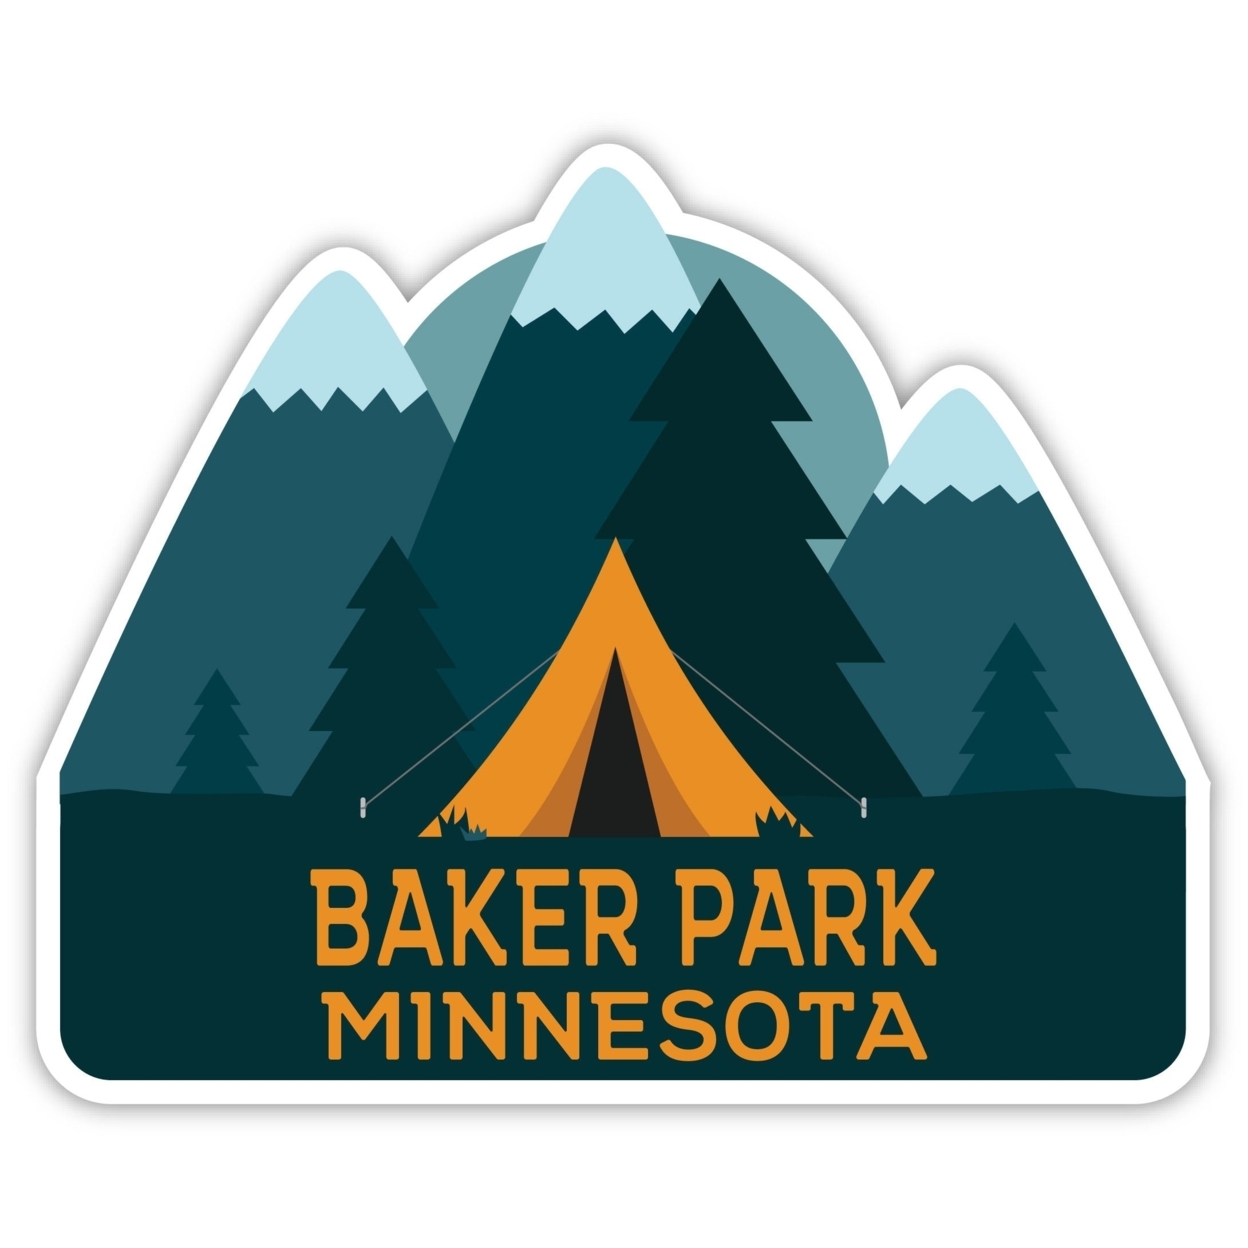 Baker Park Minnesota Souvenir Decorative Stickers (Choose Theme And Size) - 4-Pack, 2-Inch, Tent